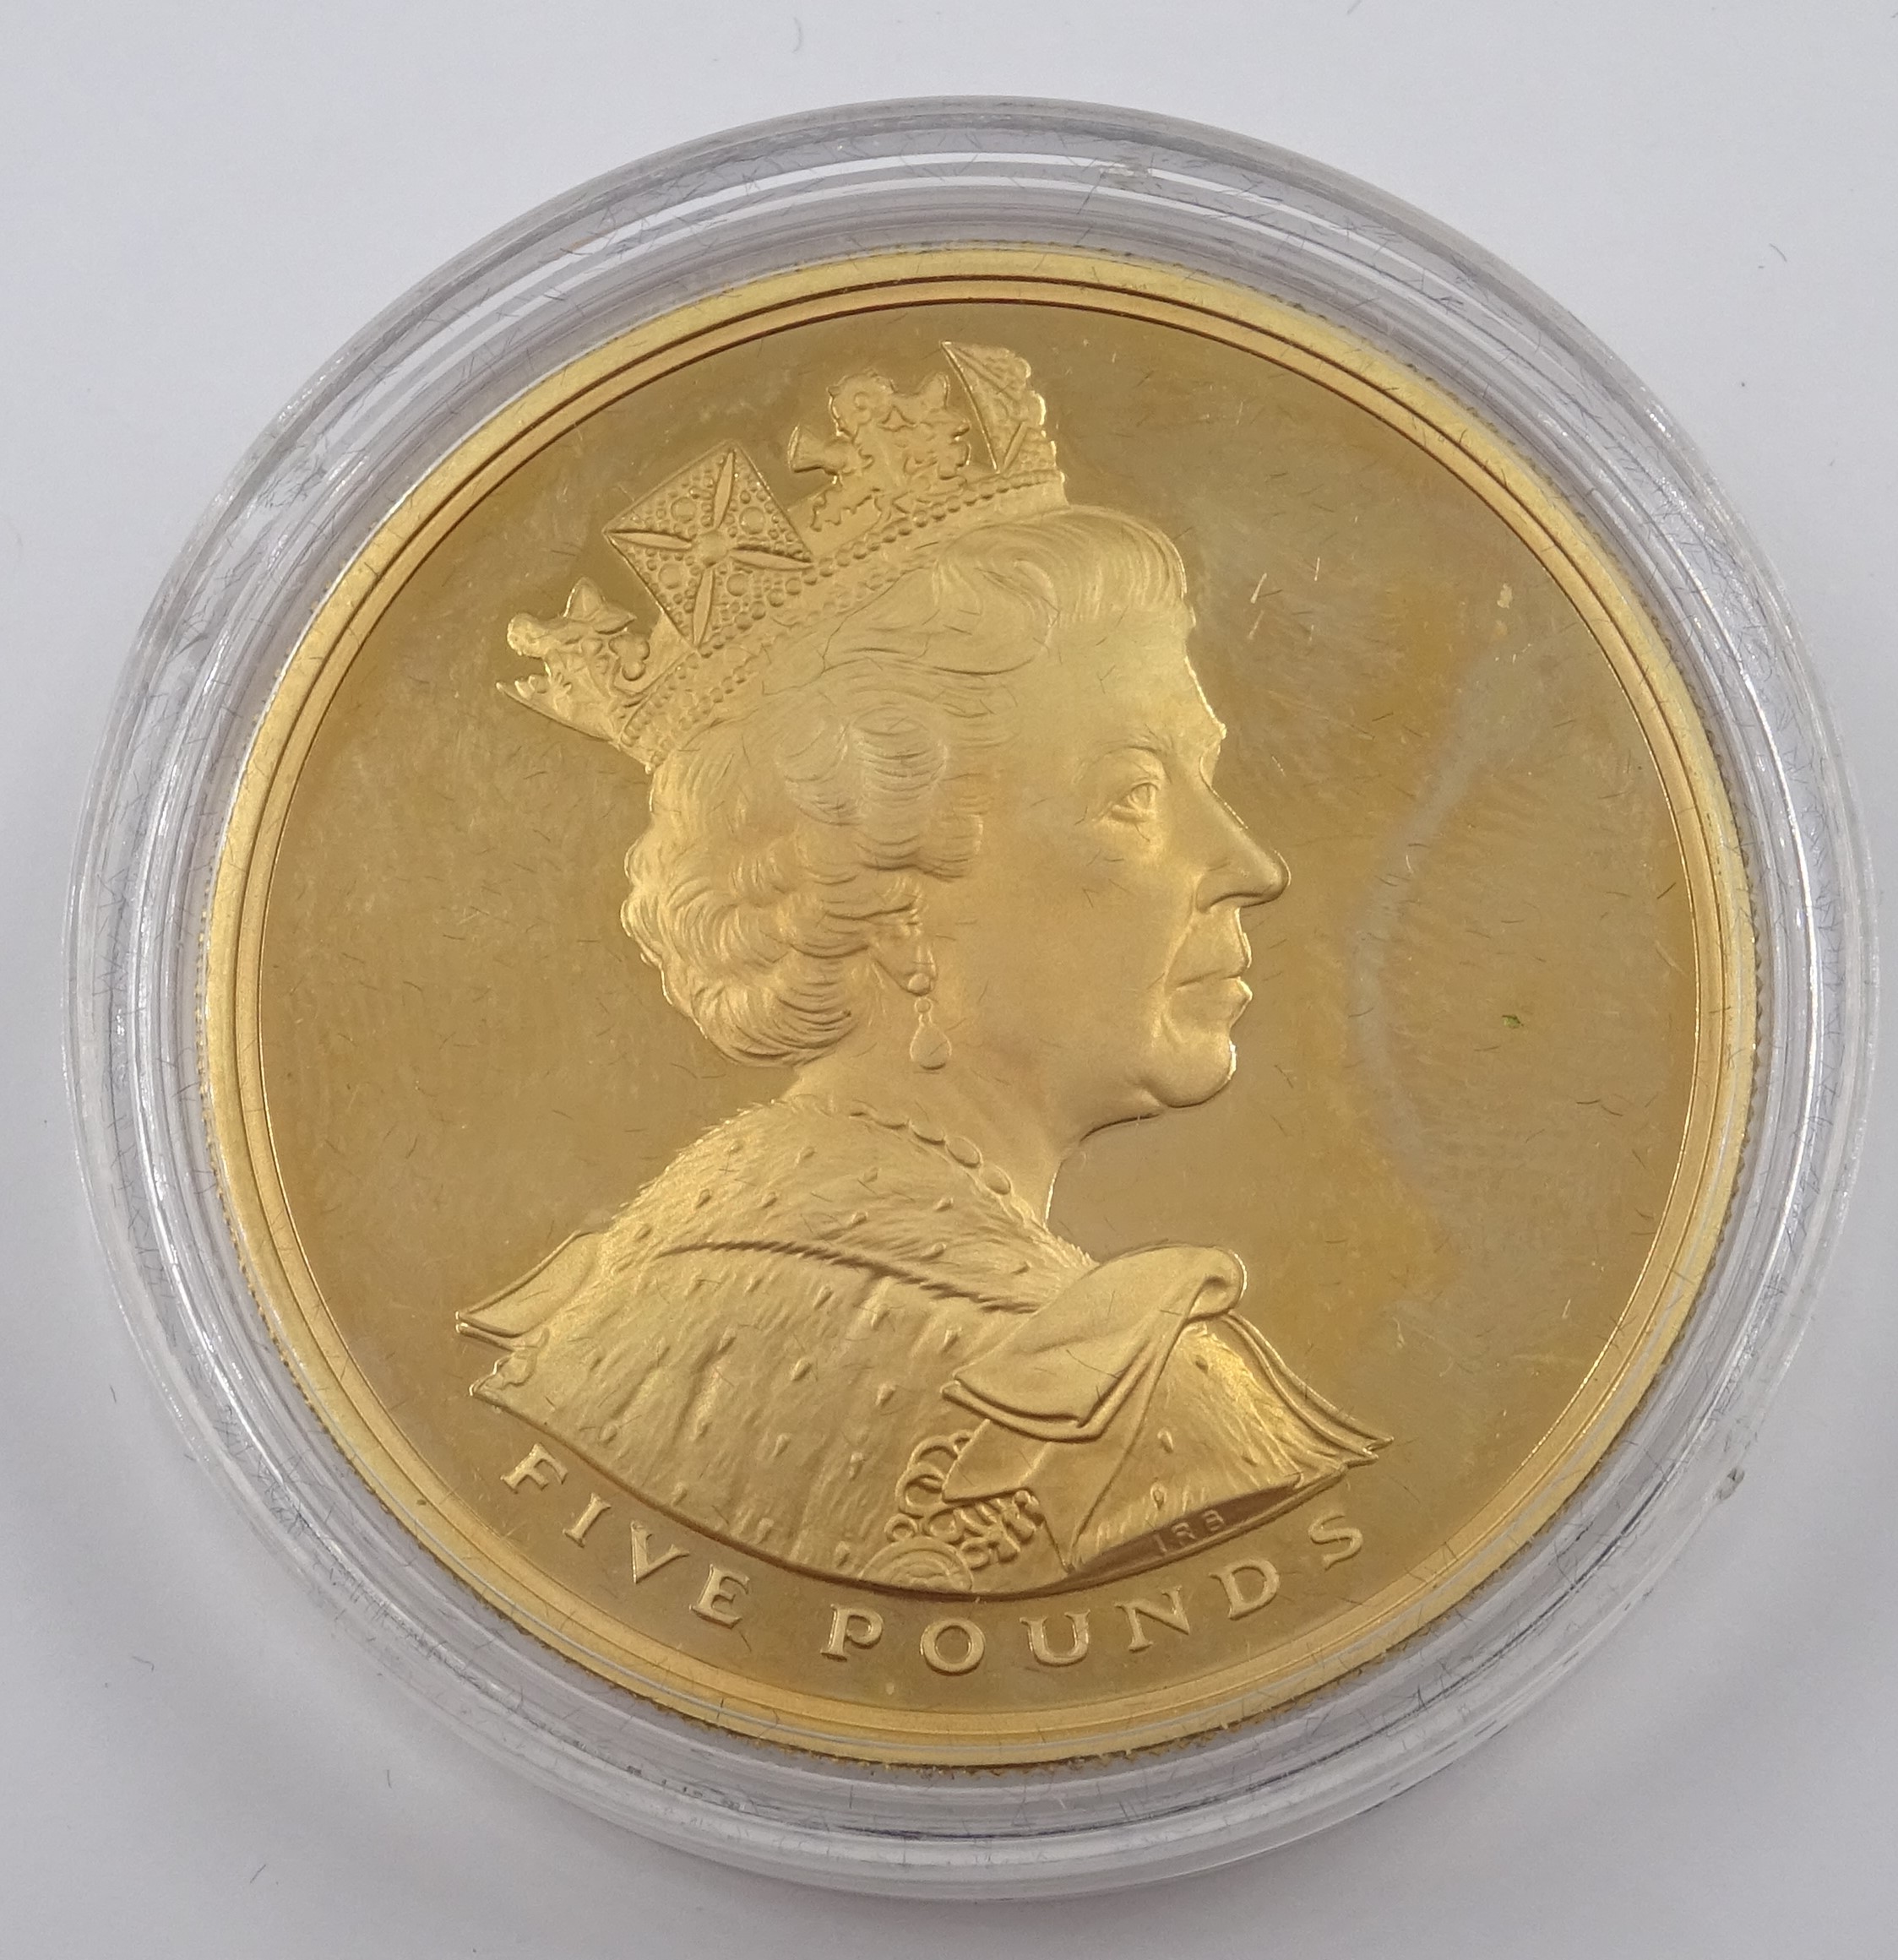 Queen Elizabeth II 2002 gold proof five pound coin, 'Golden Jubilee', - Image 3 of 3